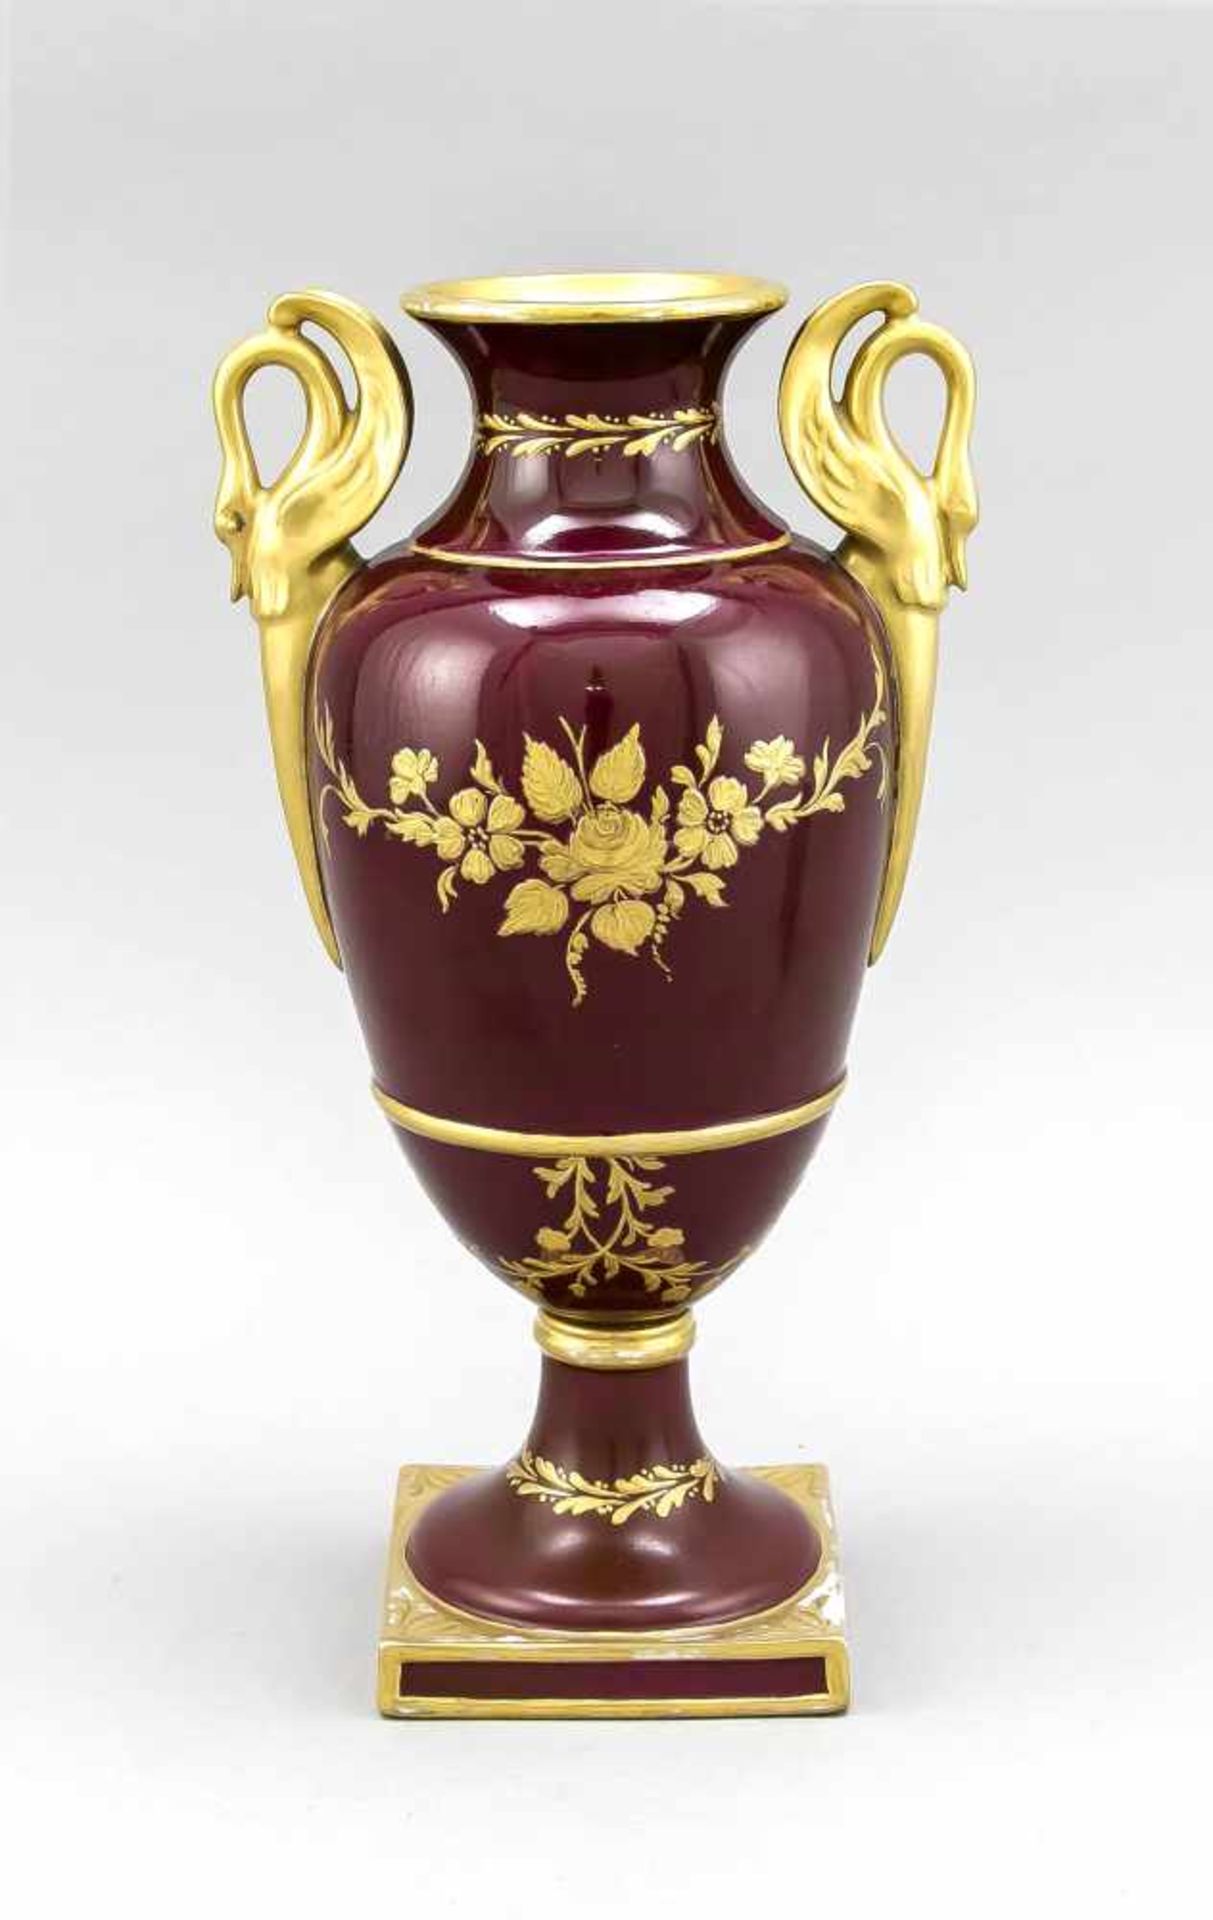 Empire-Vase in Sèvres-Manier, w. Italien, 19. Jh., Amphorenform mit hochgezogenenSchwanenhenkeln, - Image 2 of 2